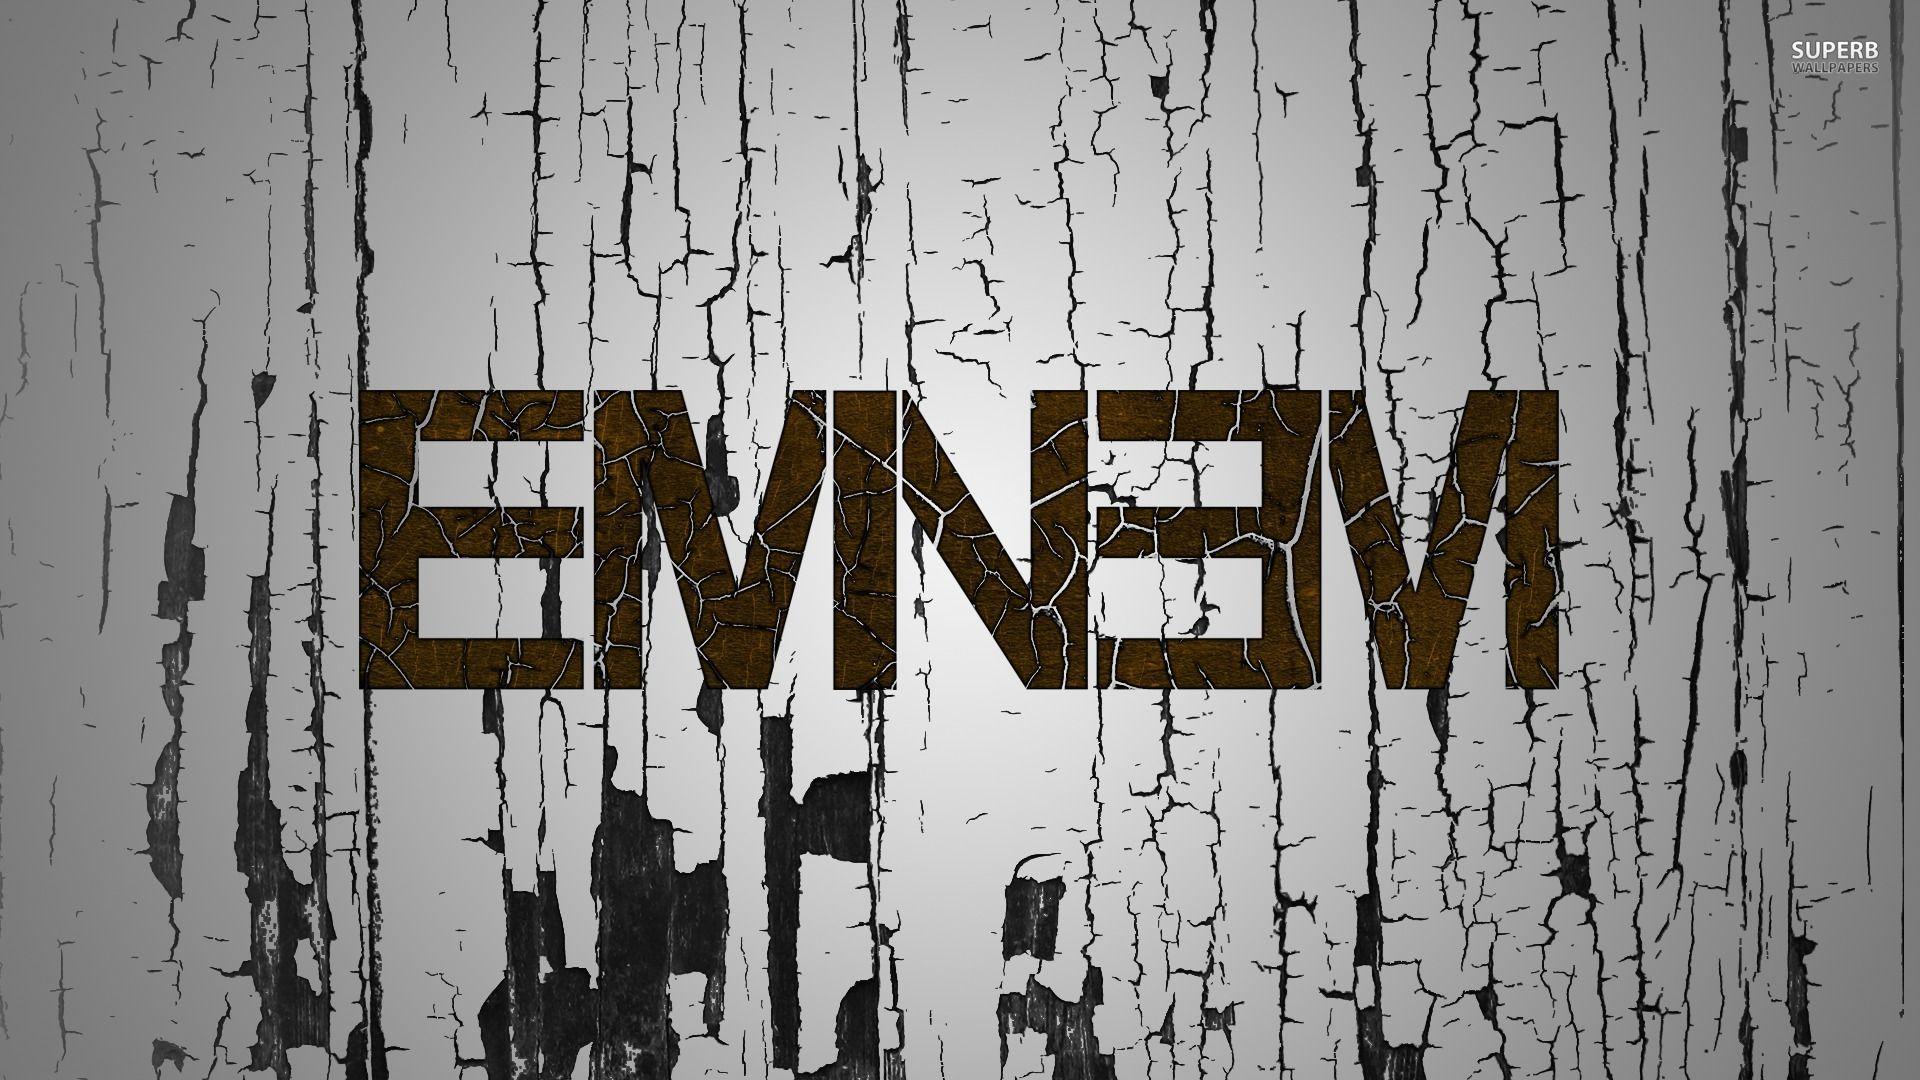 eminem new logo